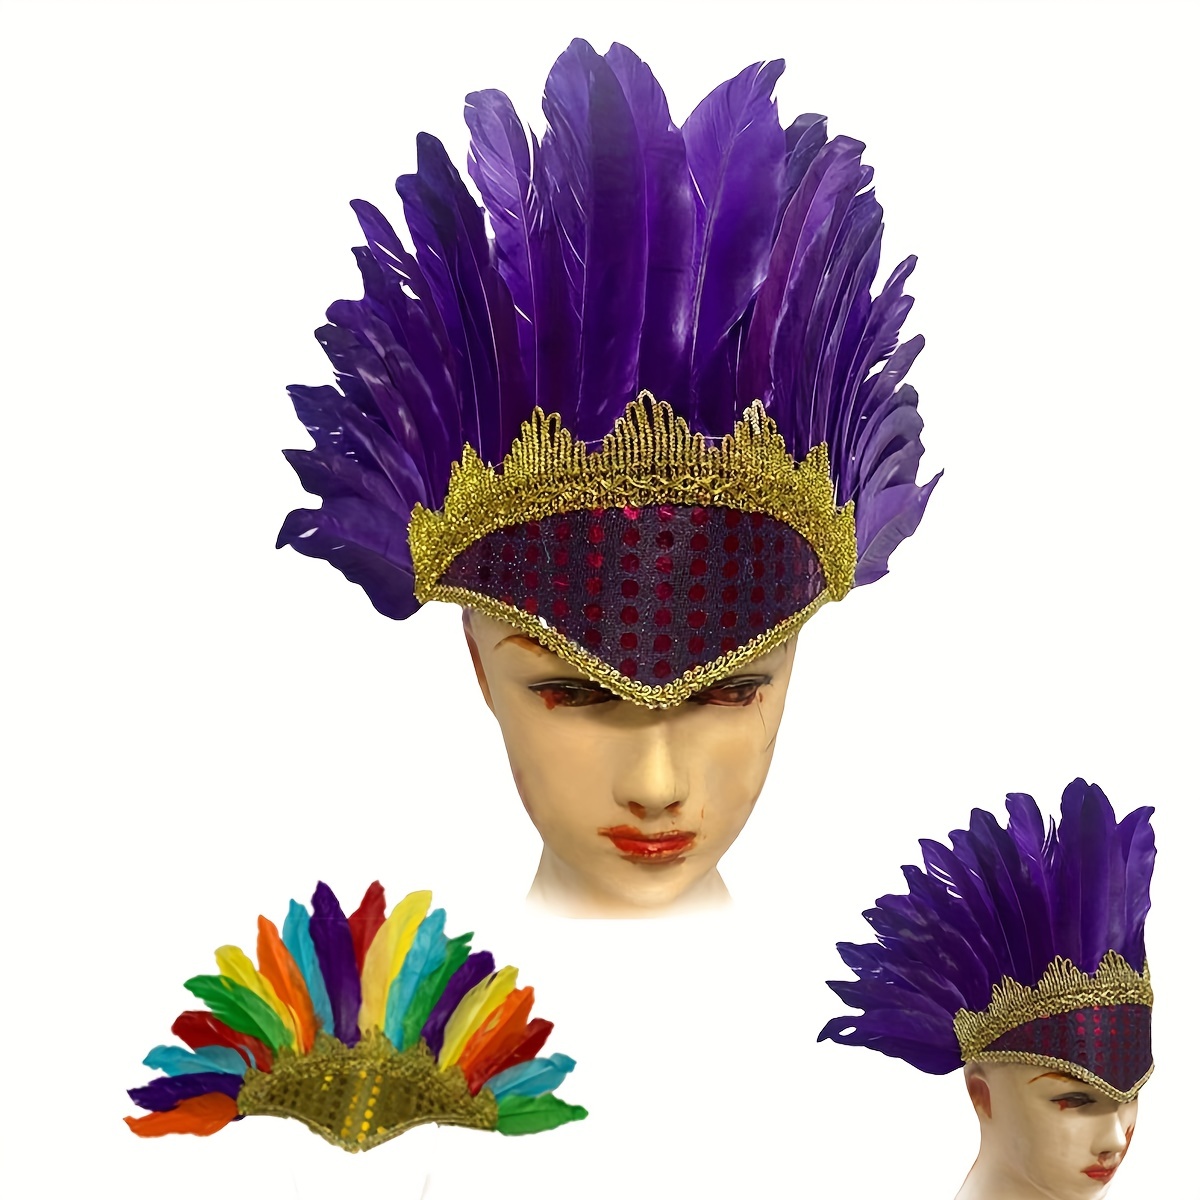 Diadema de plumas con decoración de corona, tocado de estilo étnico,  tocados indios, tocados bohemios, accesorios para el cabello de nativos